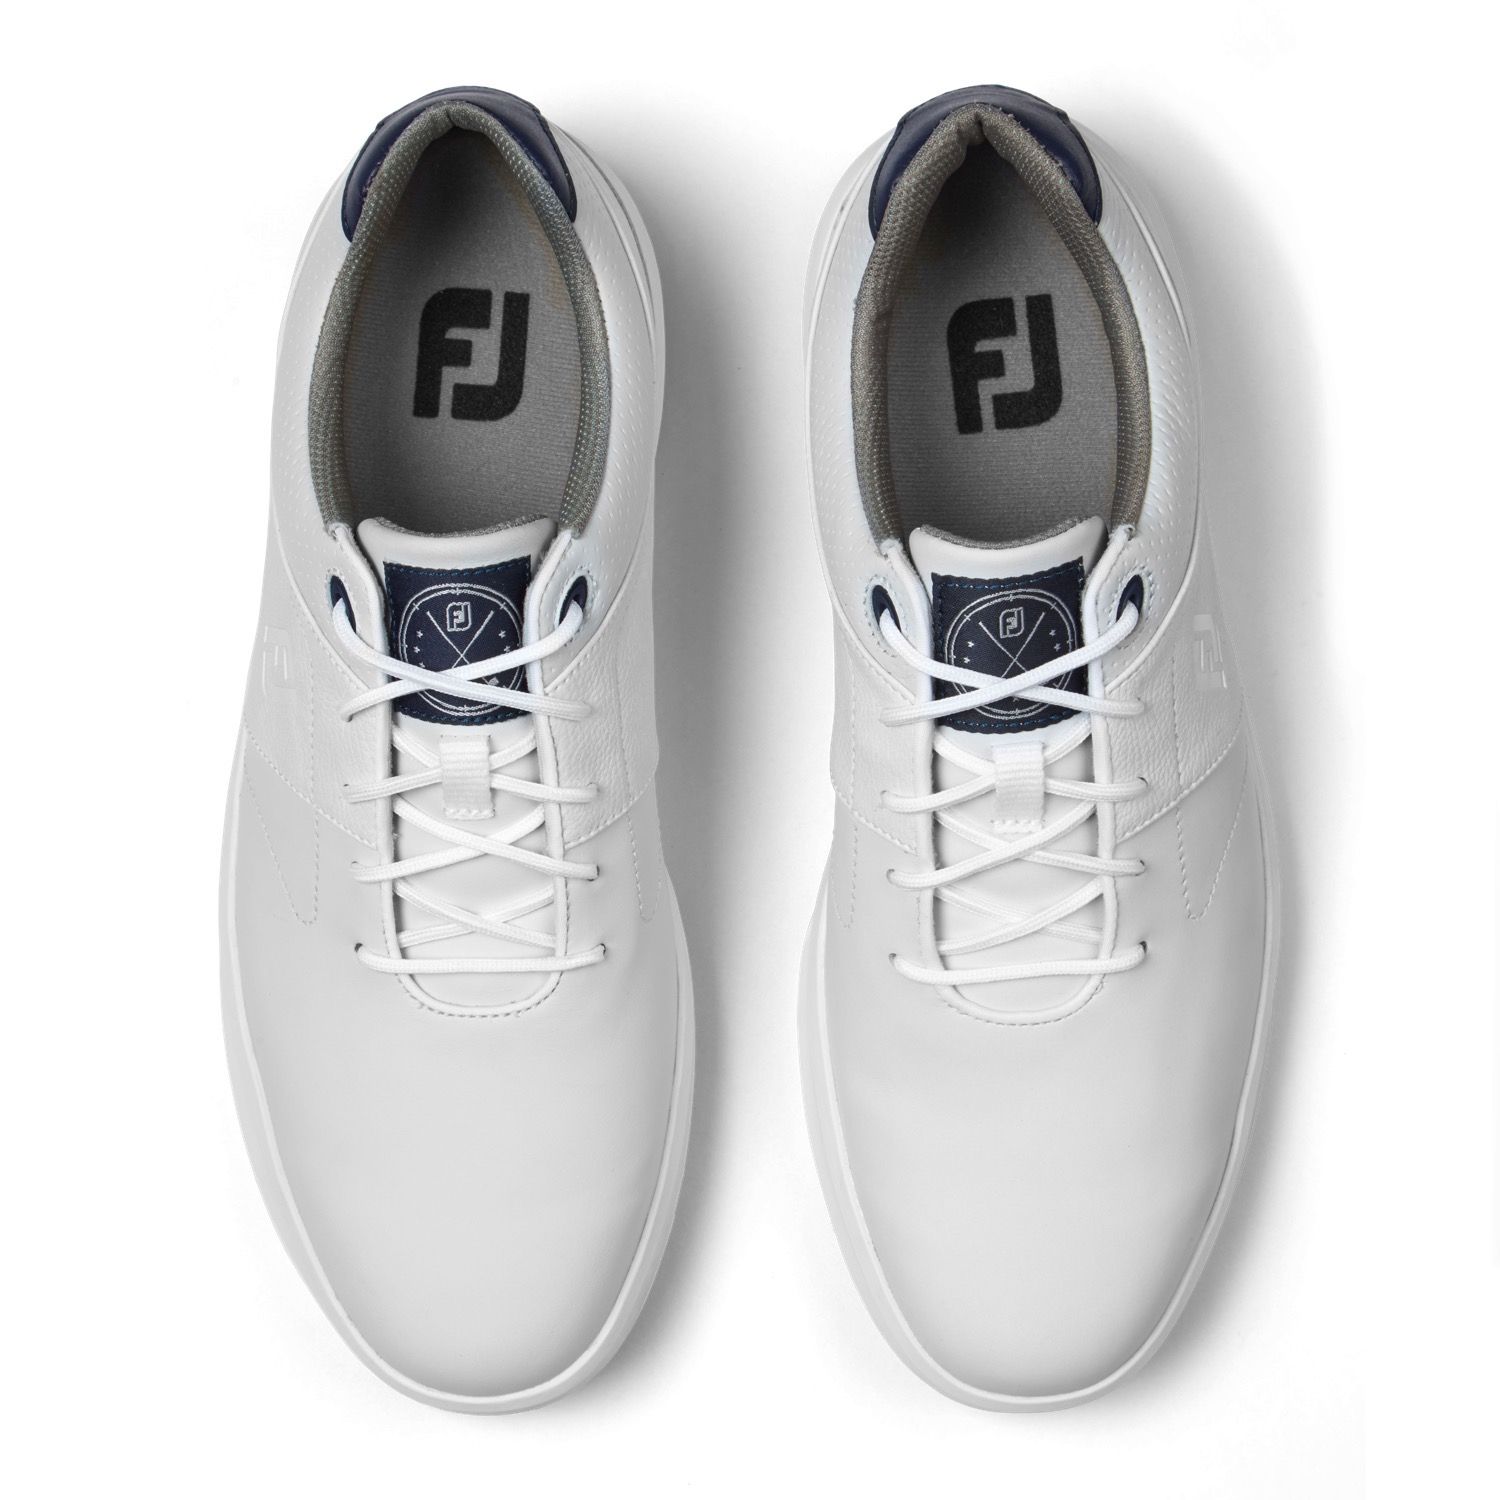 FootJoy Contour Golf Shoes #54113 White | Scottsdale Golf